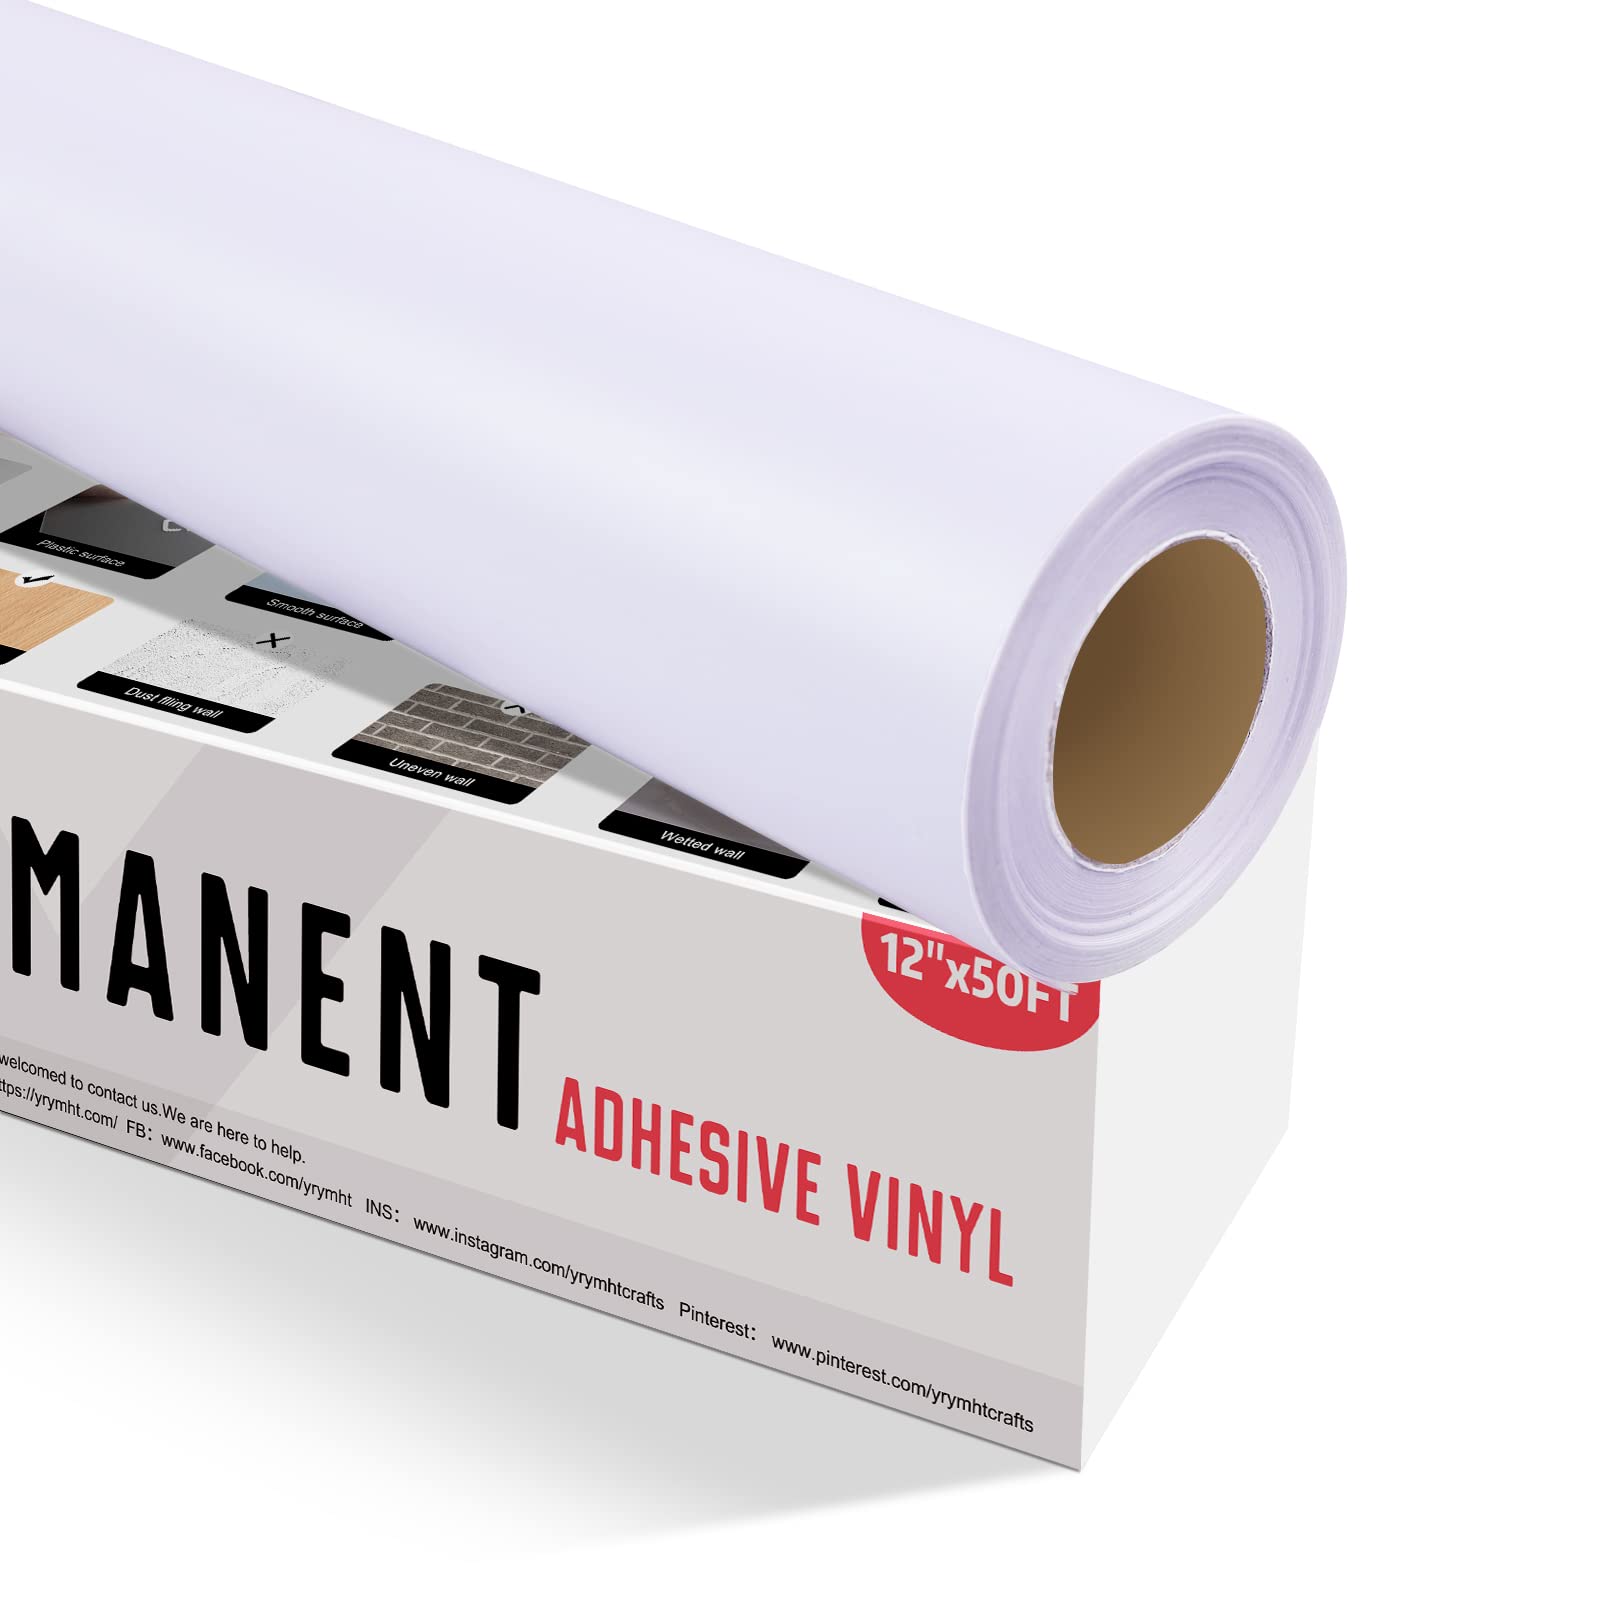 Permanent Adhesive Vinyl Rolls - 12”x50FT White Vinyl Sheets for